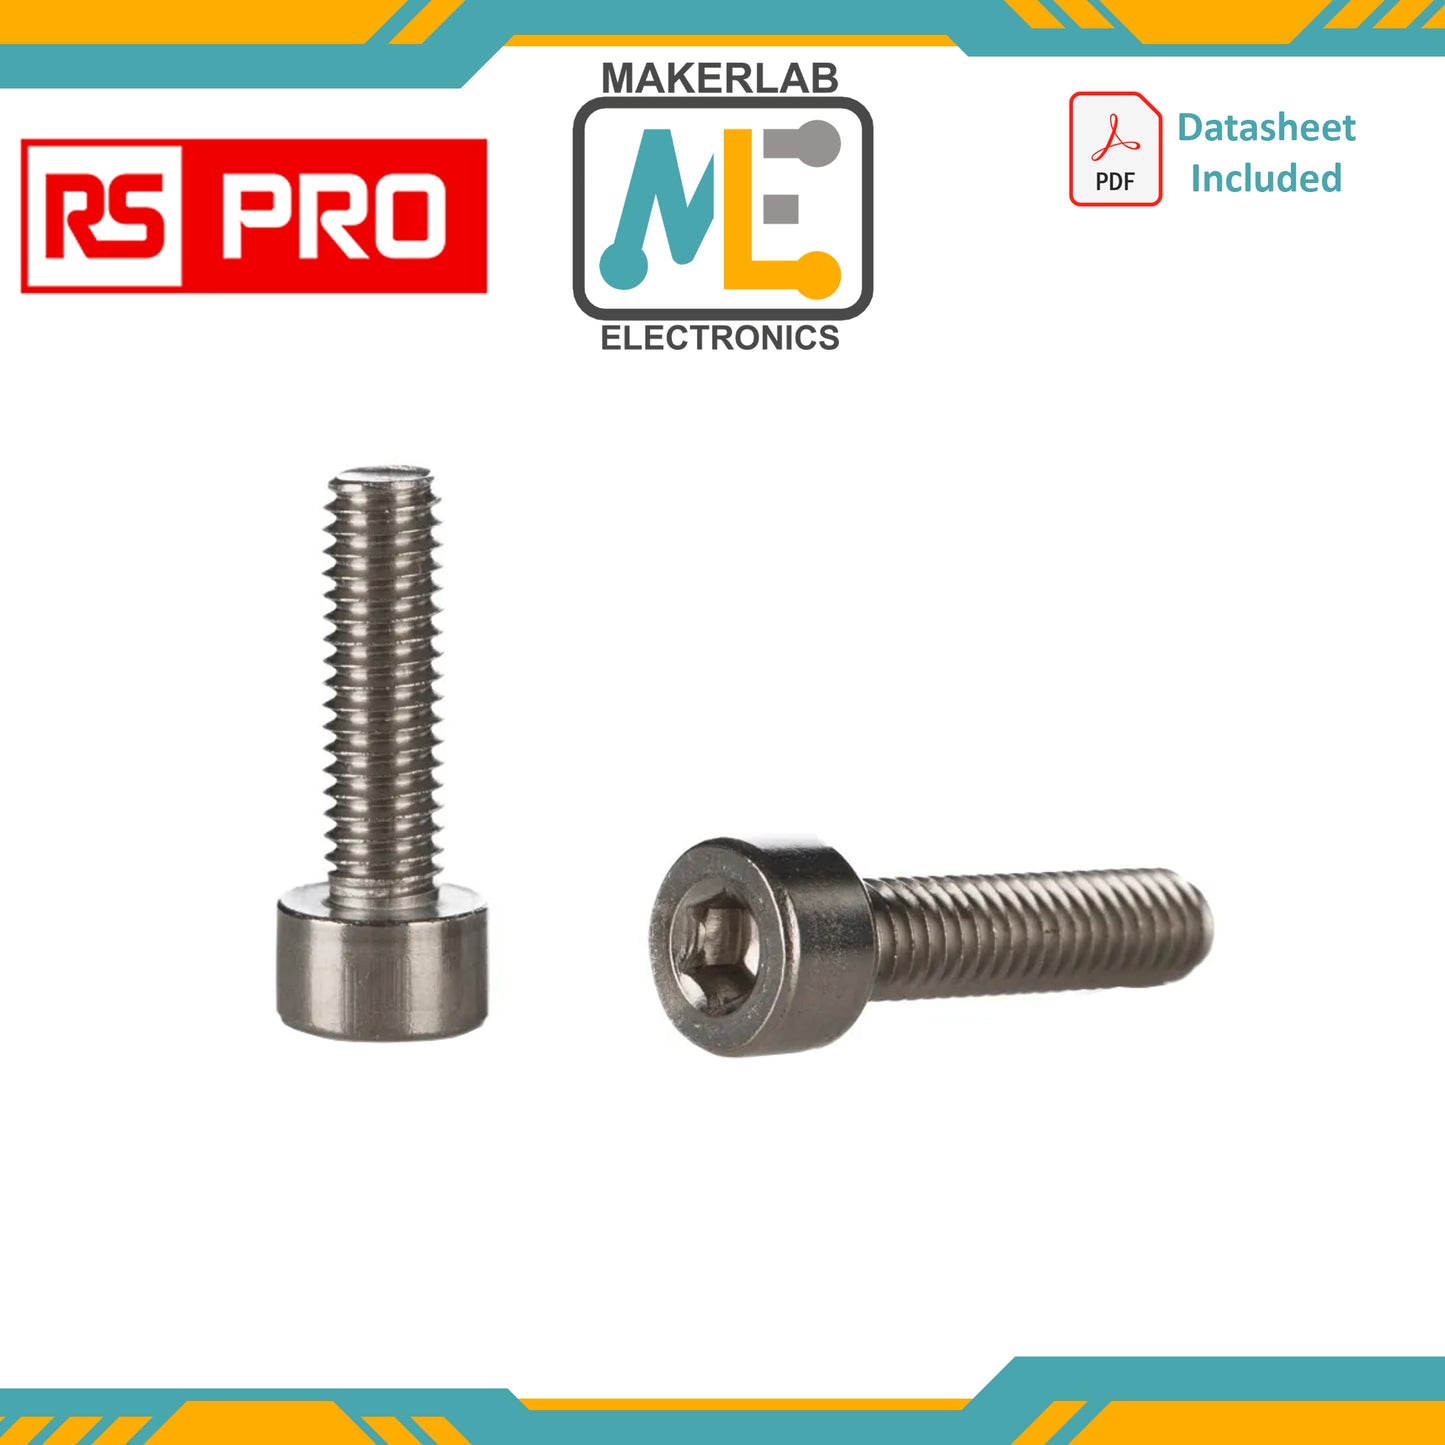 RS PRO Plain Stainless Steel Hex Socket Cap Screw, DIN 912, M3 x 10mm